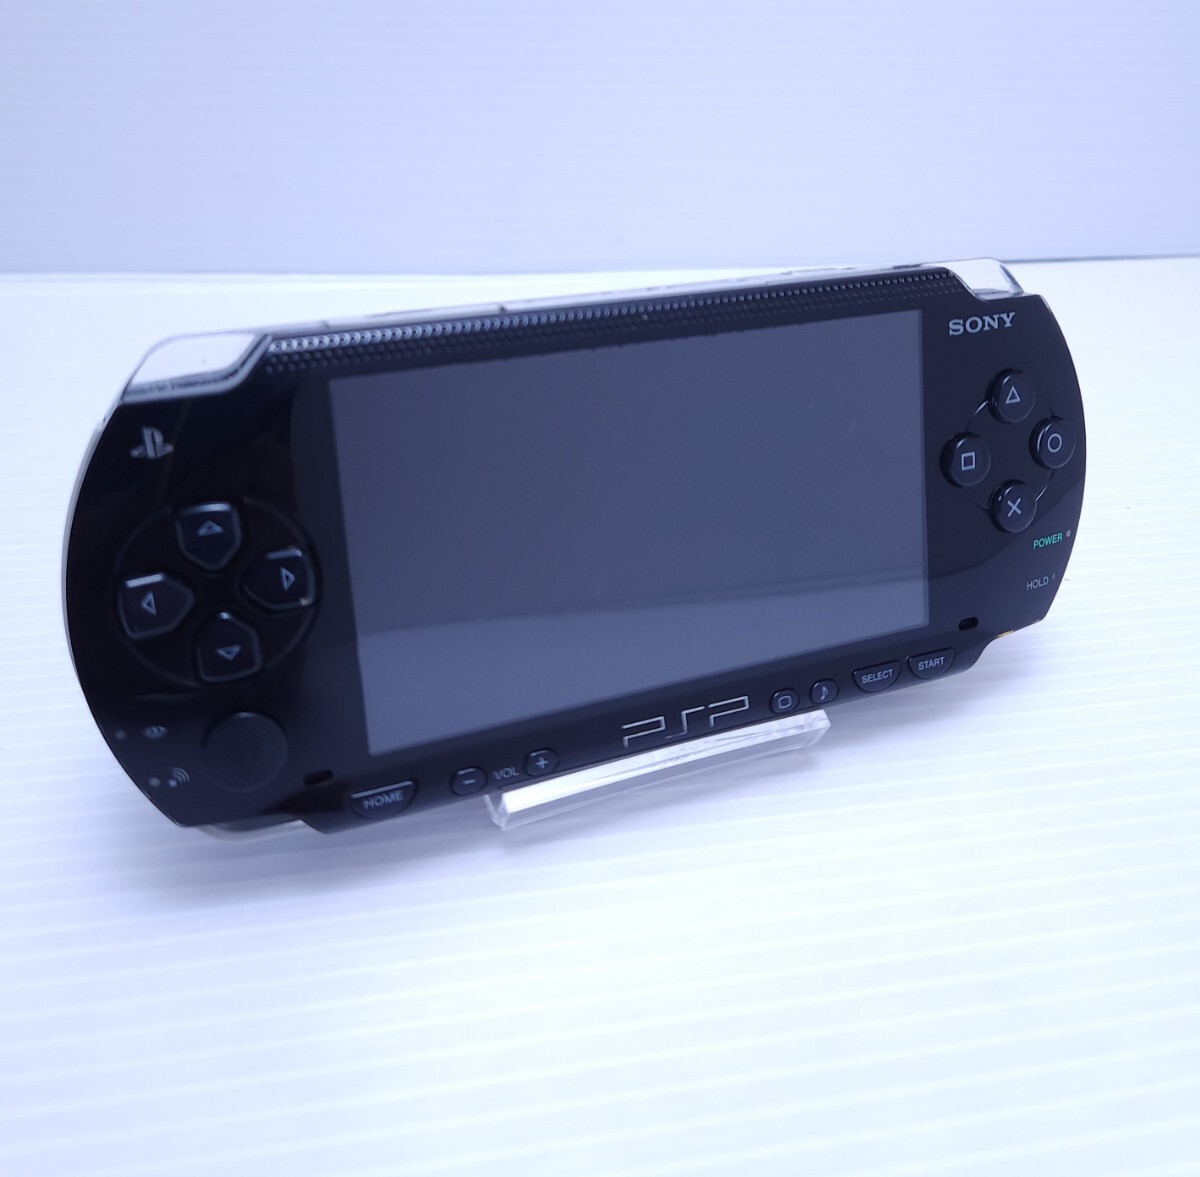  operation goods Sony SONY PSP-1000 black Sony PSP-1000 Black body 4GB memory card, battery / used rare goods (H-251)